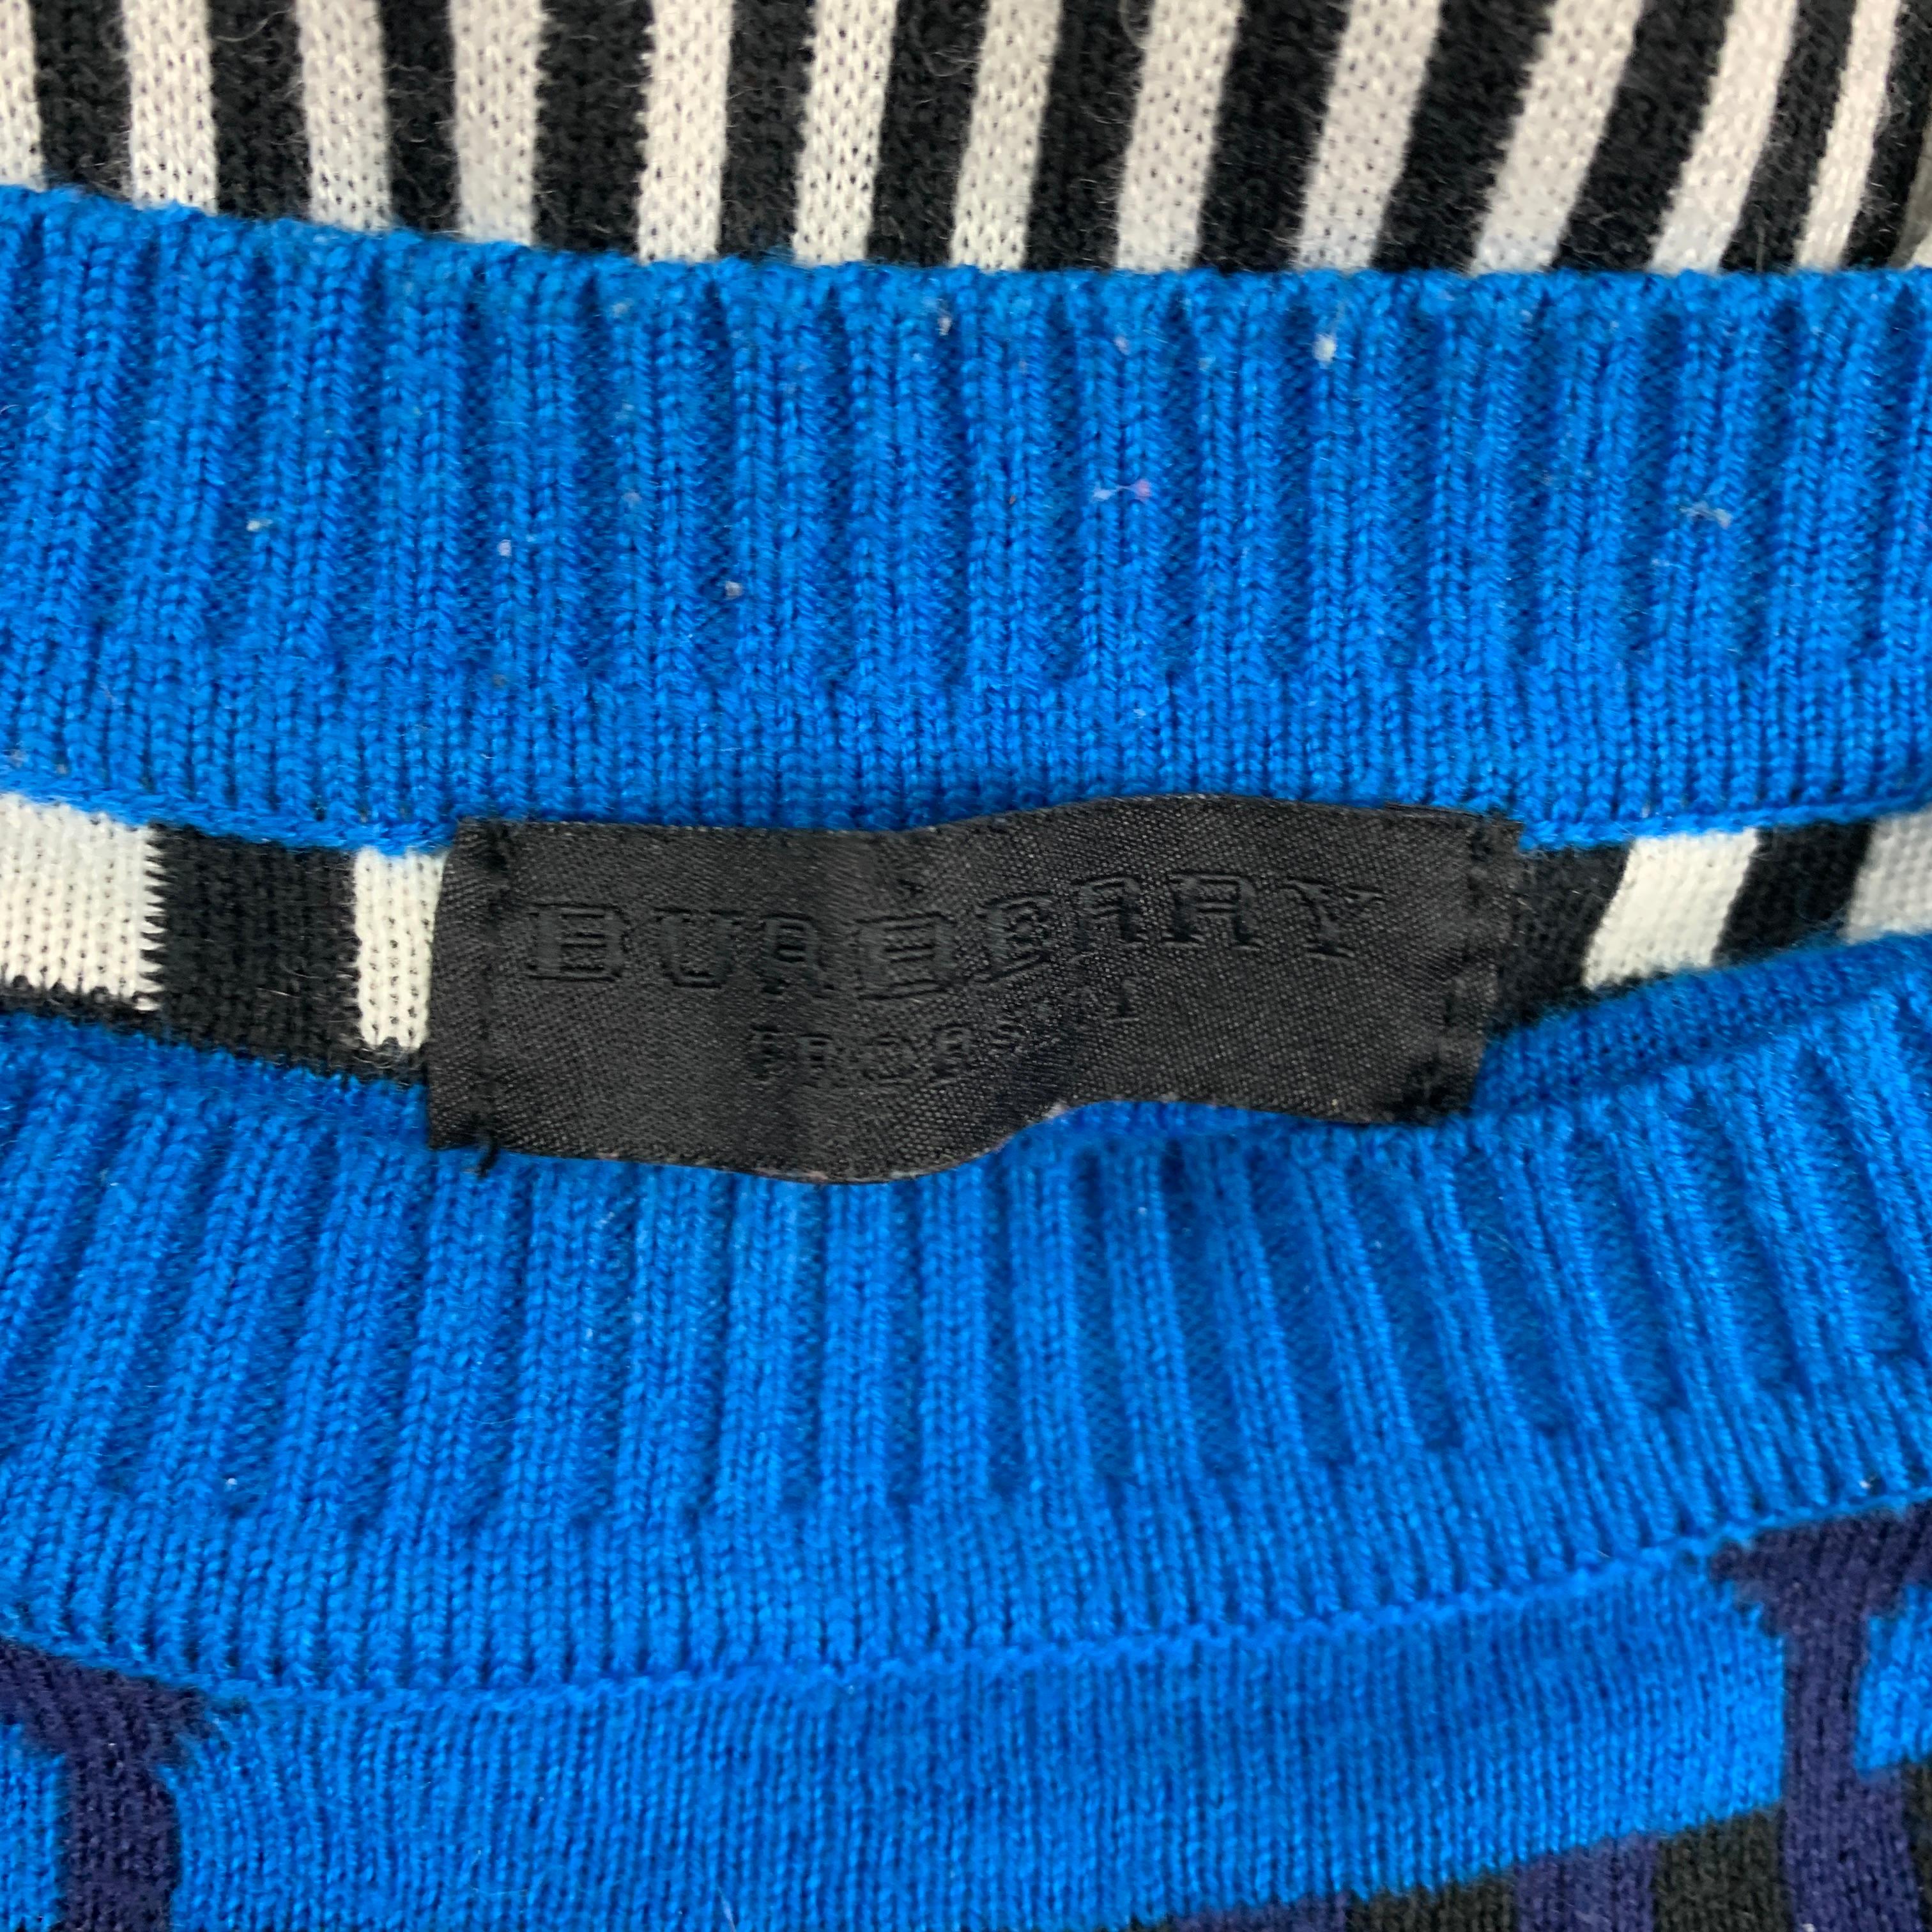 BURBERRY PRORSUM Spring 2012 Size M Multi-Color Wool / Cashmere Sweater 1